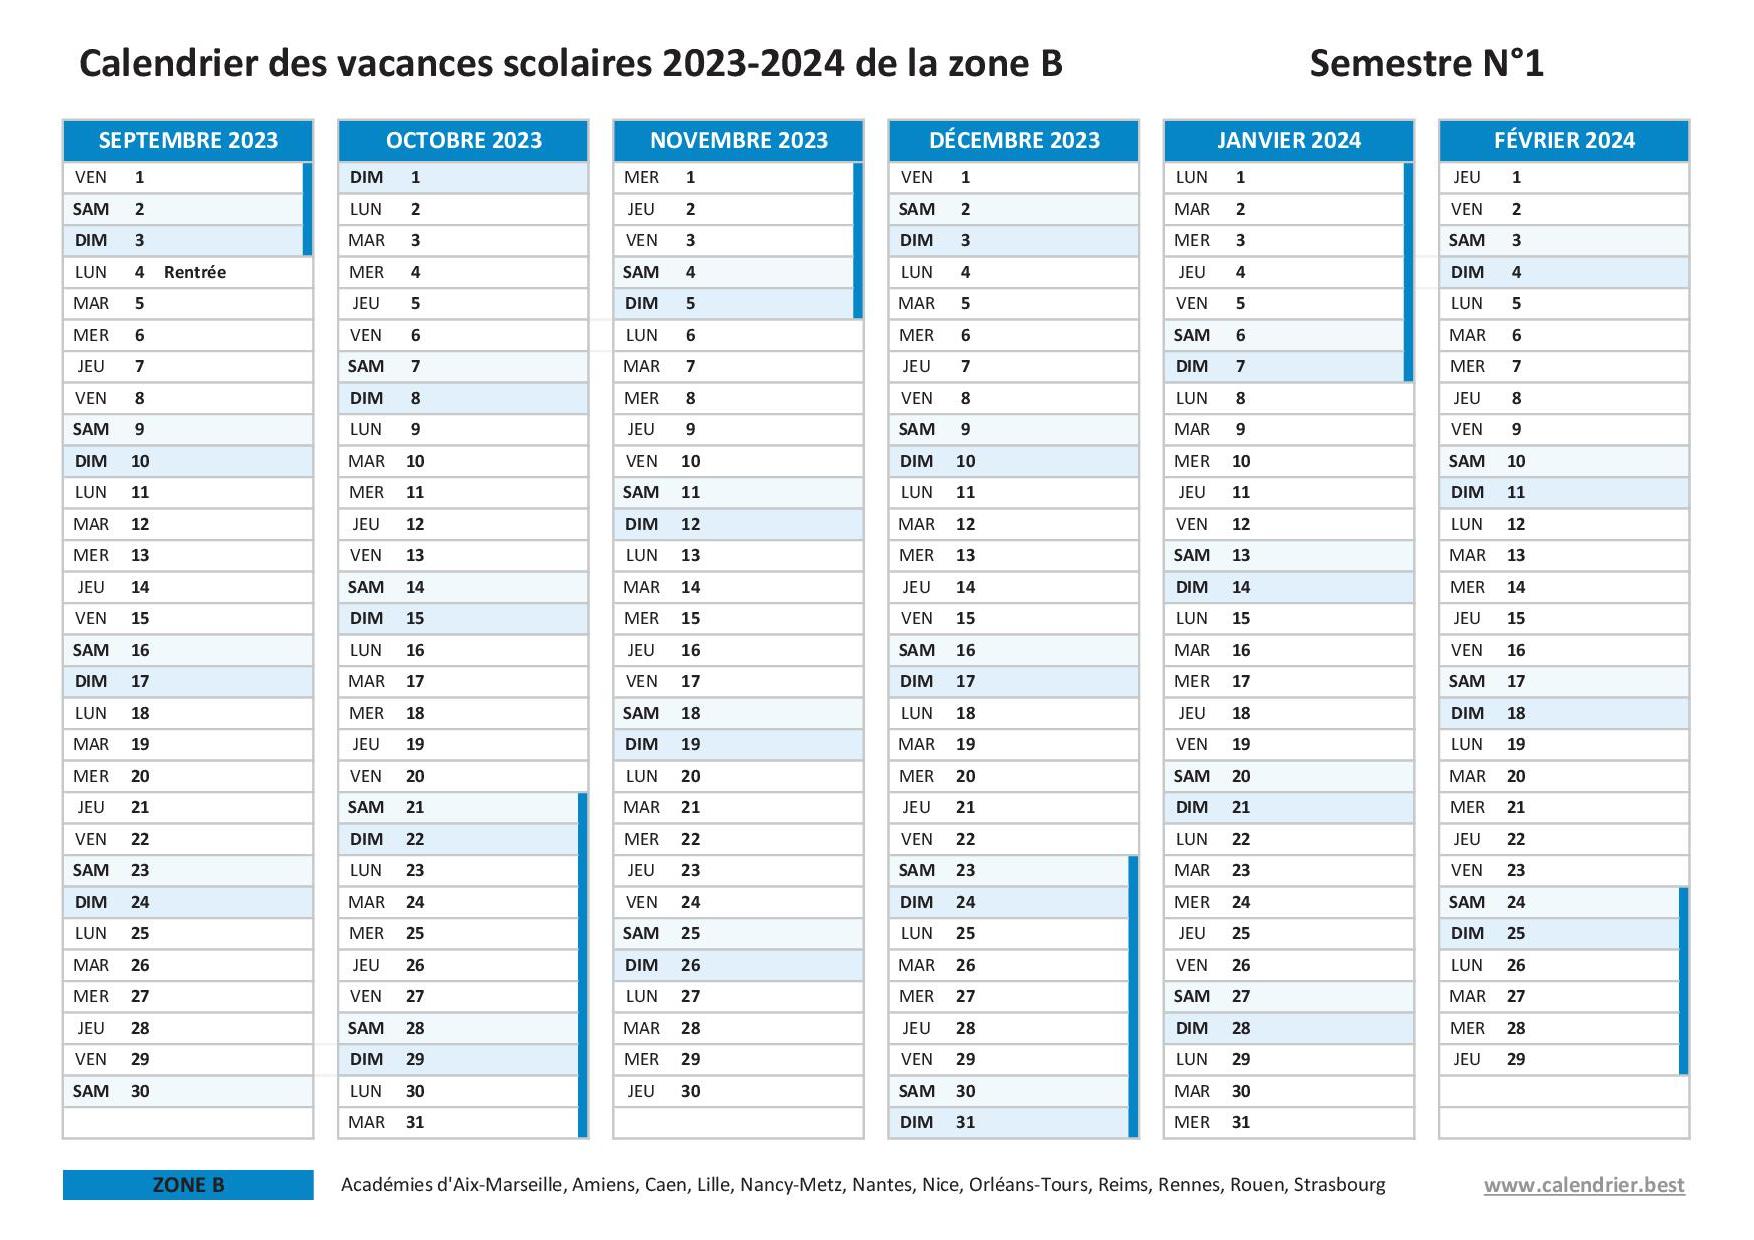 Vacances scolaires 2023 2024 ZONE B - Calendrier scolaire 2023-2024